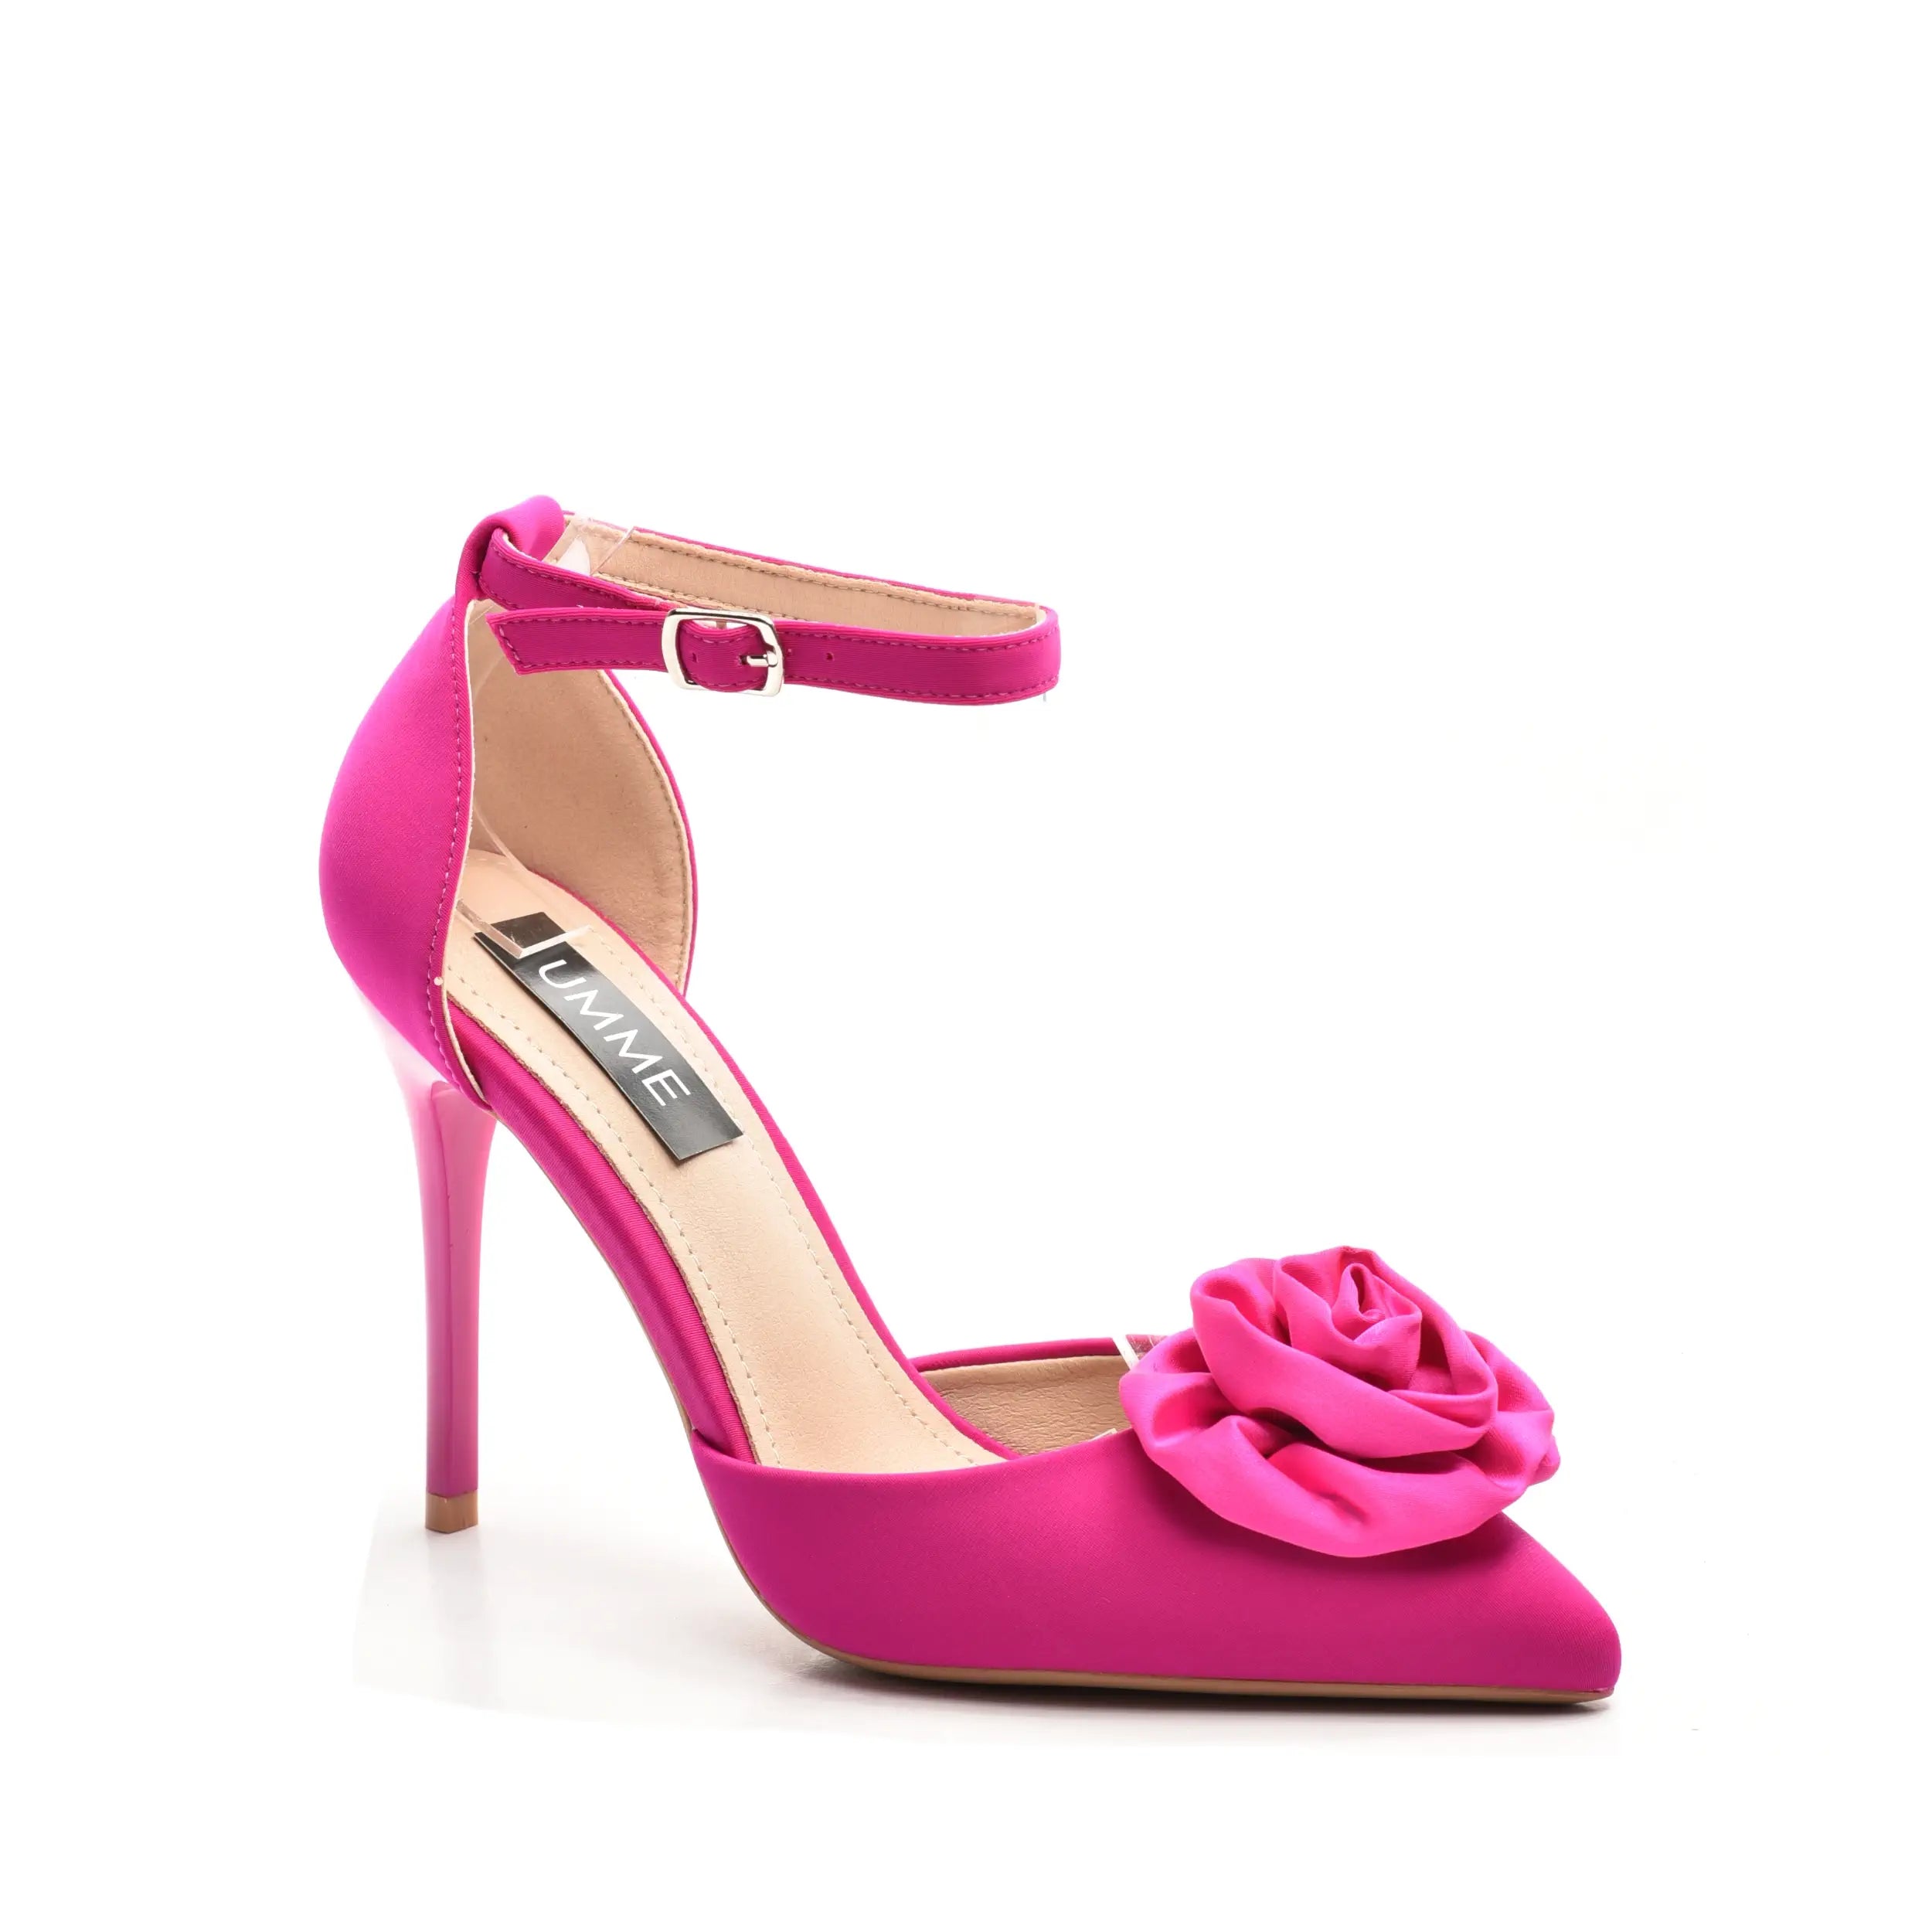 Pantofi roz cu toc subtire si decor floral, eleganti si chic